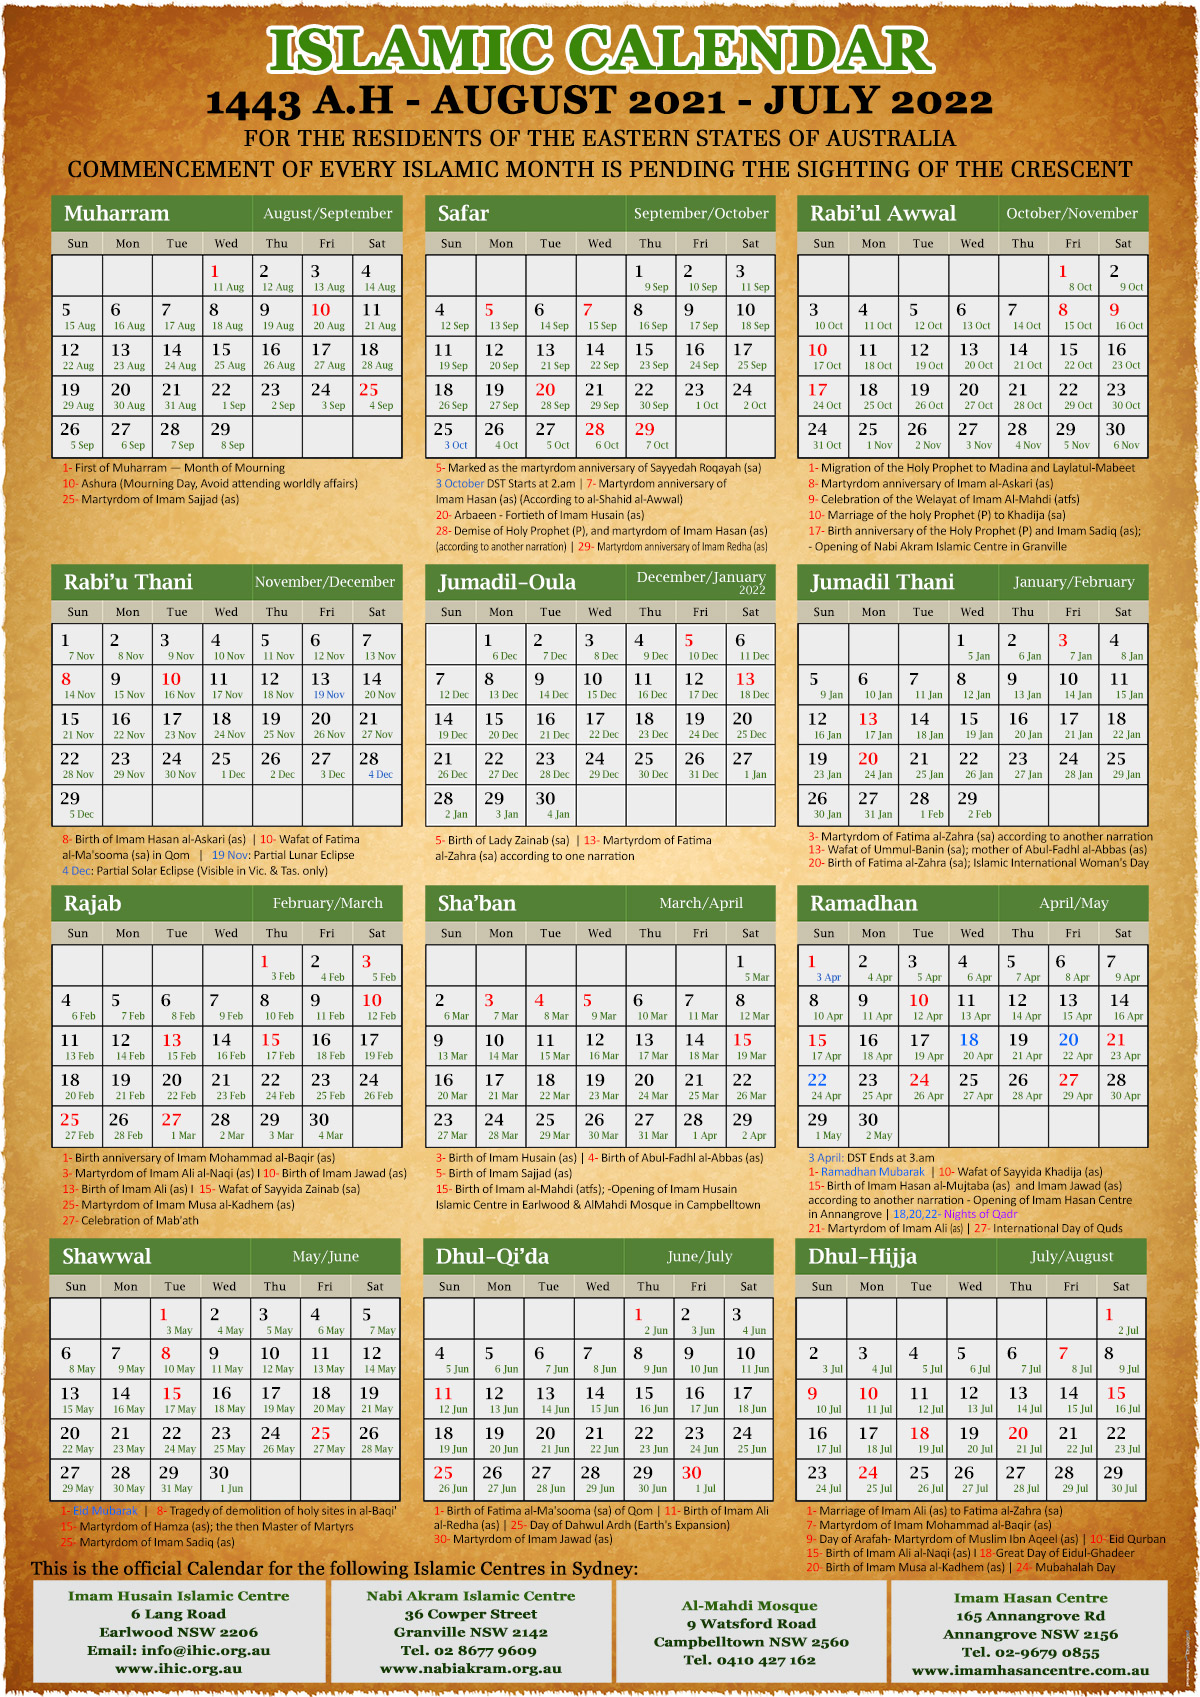 Annual Islamic Calendar 1443 A H 2021 2022 Imam Husain Islamic Centre